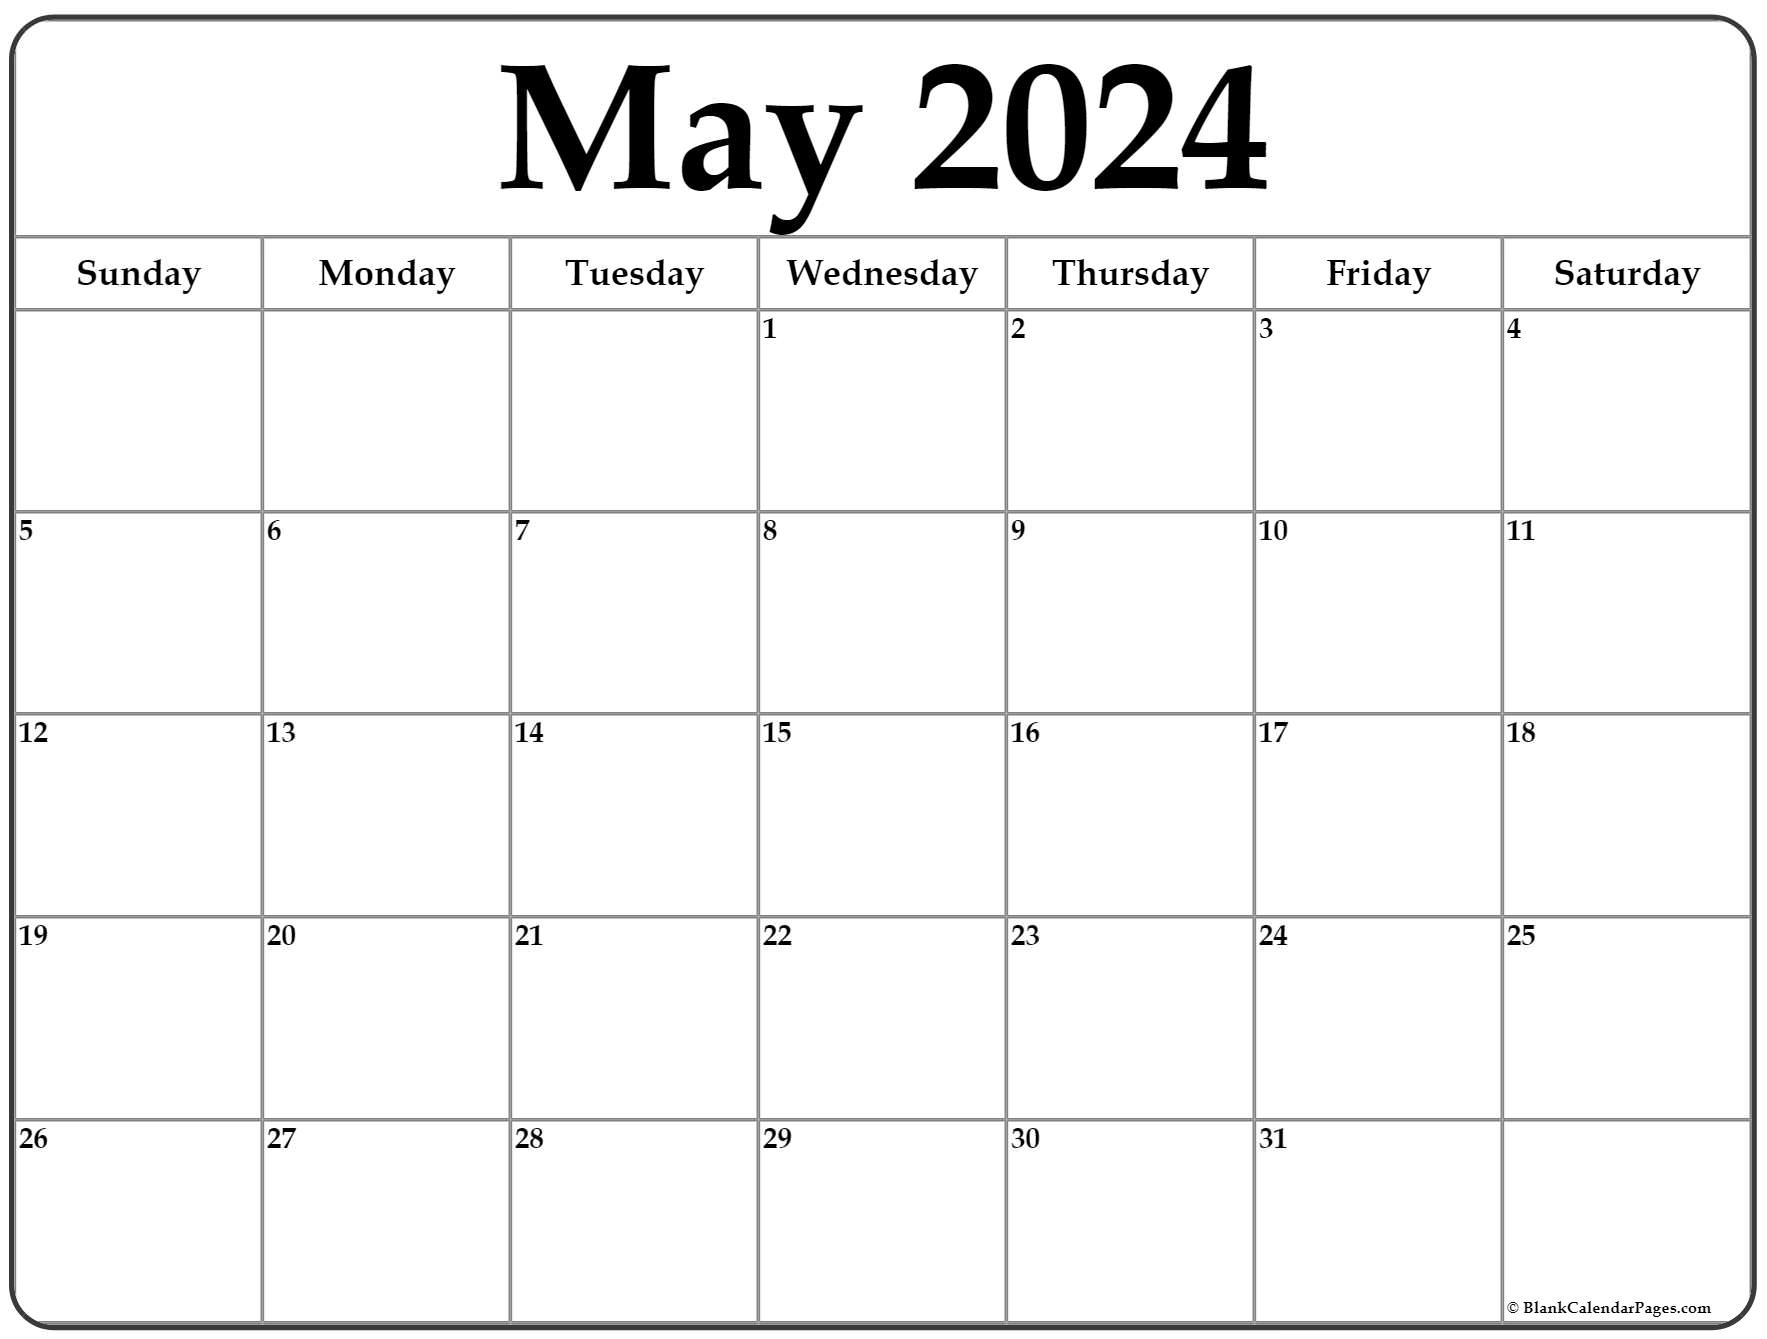 May 2024 Calendar | Free Printable Calendar for Free Printable Monthly Calendar May 2024